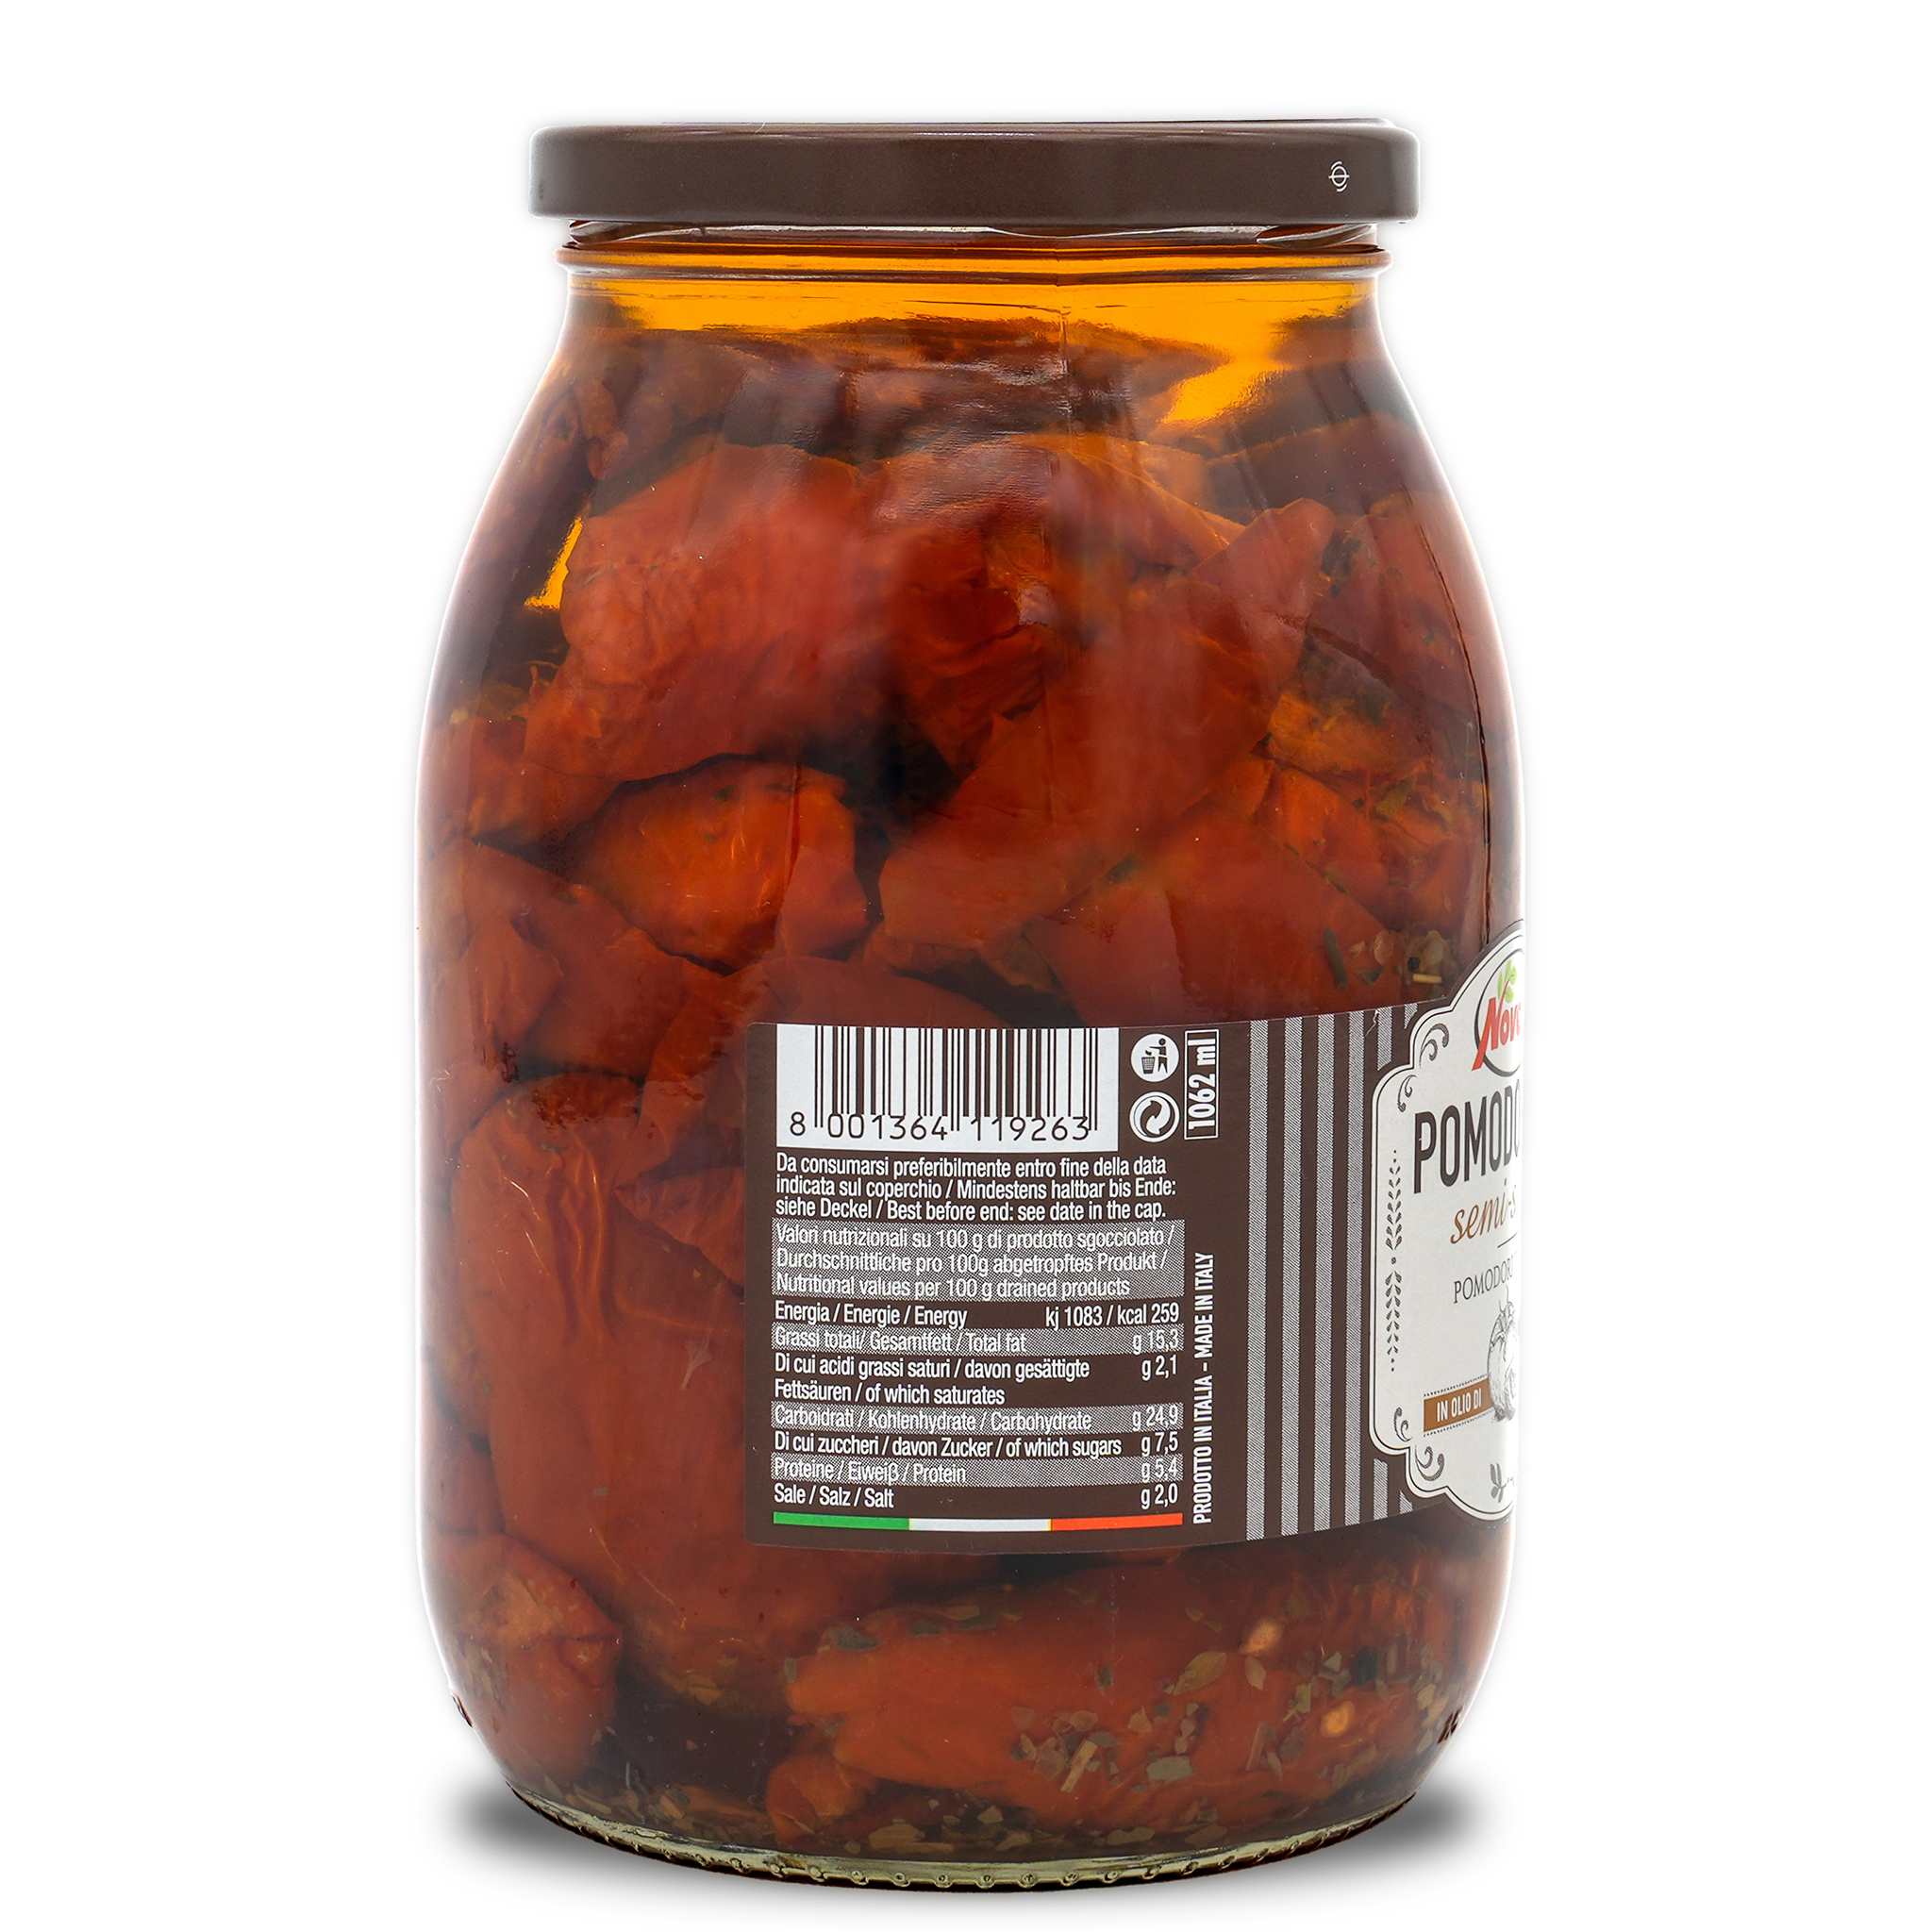 Halbgetrocknete Tomaten | Novella | Pomodorone semi-secco | in Sonnenblumenöl | 600g | aus Italien